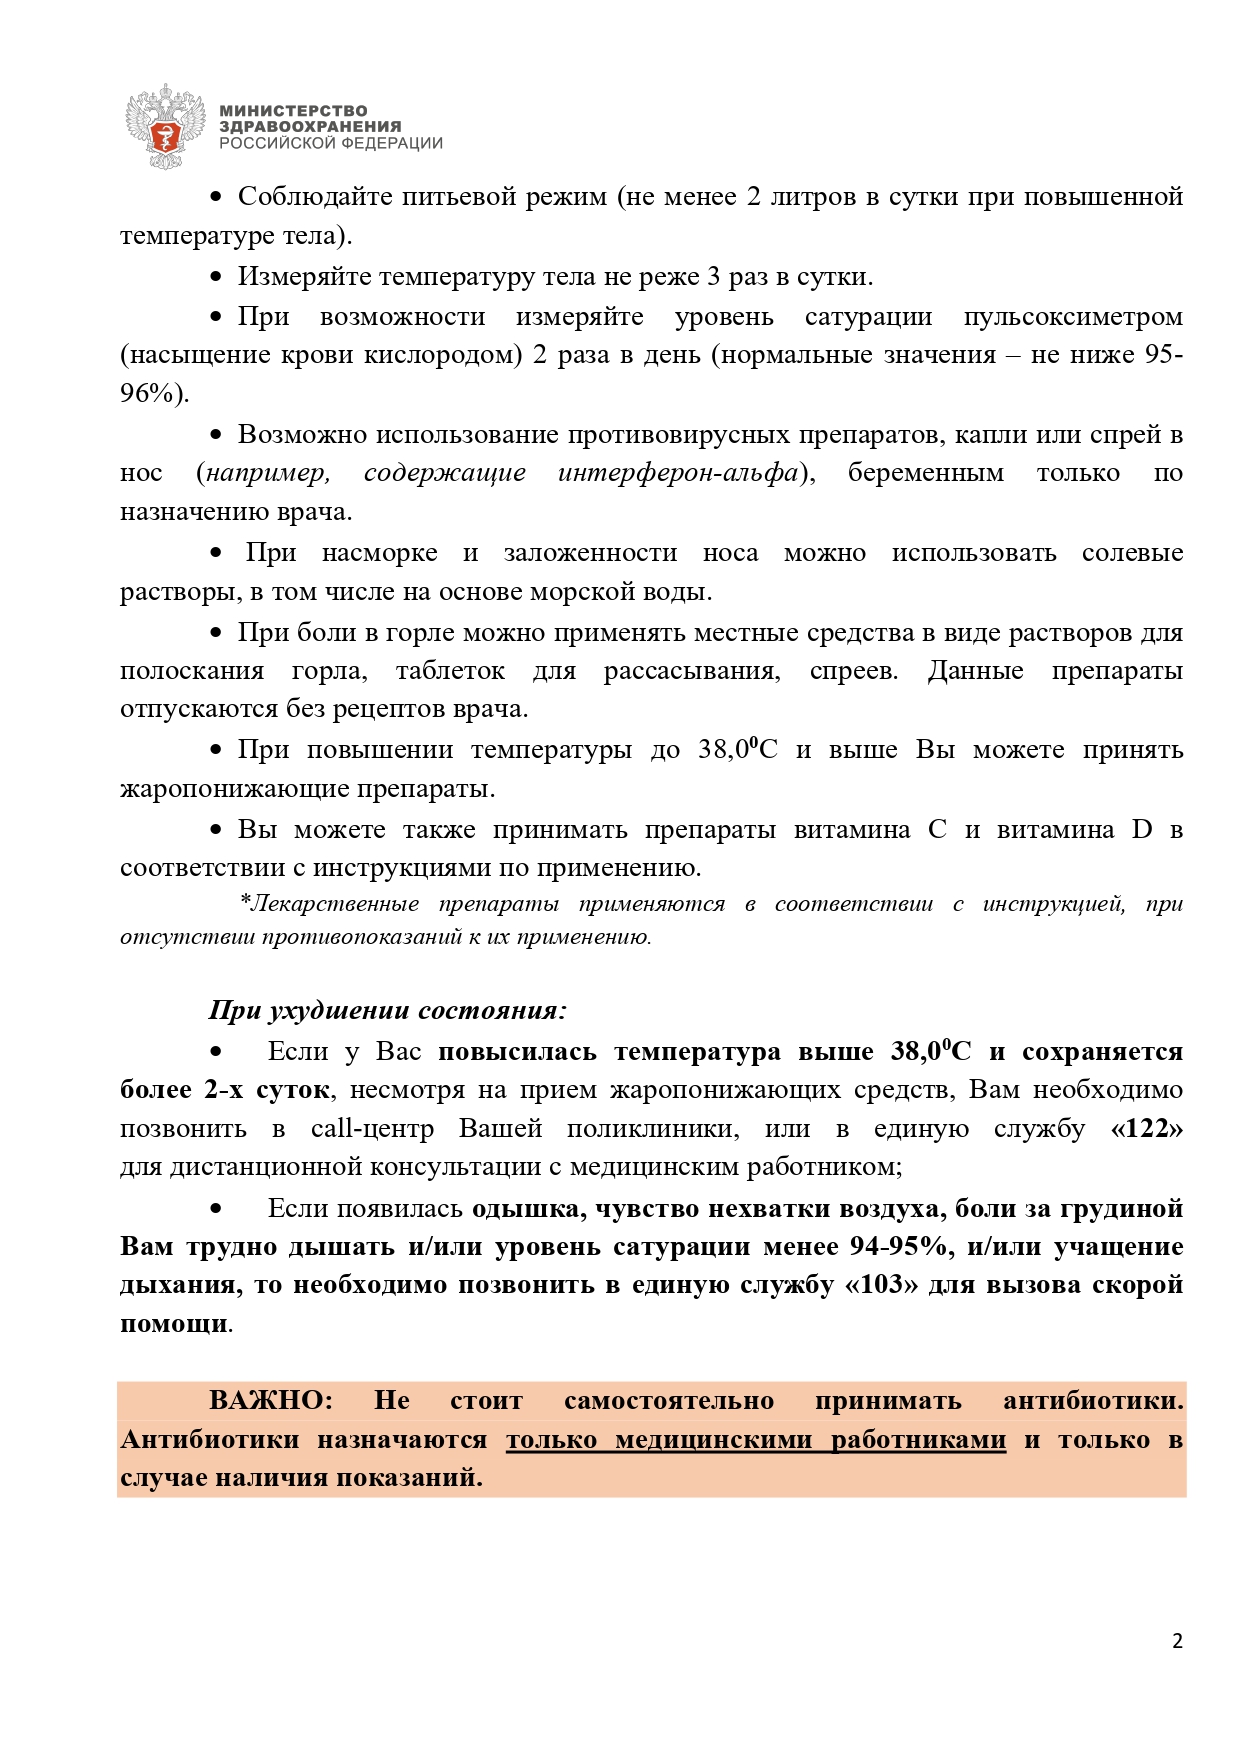 pamyatka_ambulatornoe_lechenie_ki_orvi_25.01.2022_page-0002